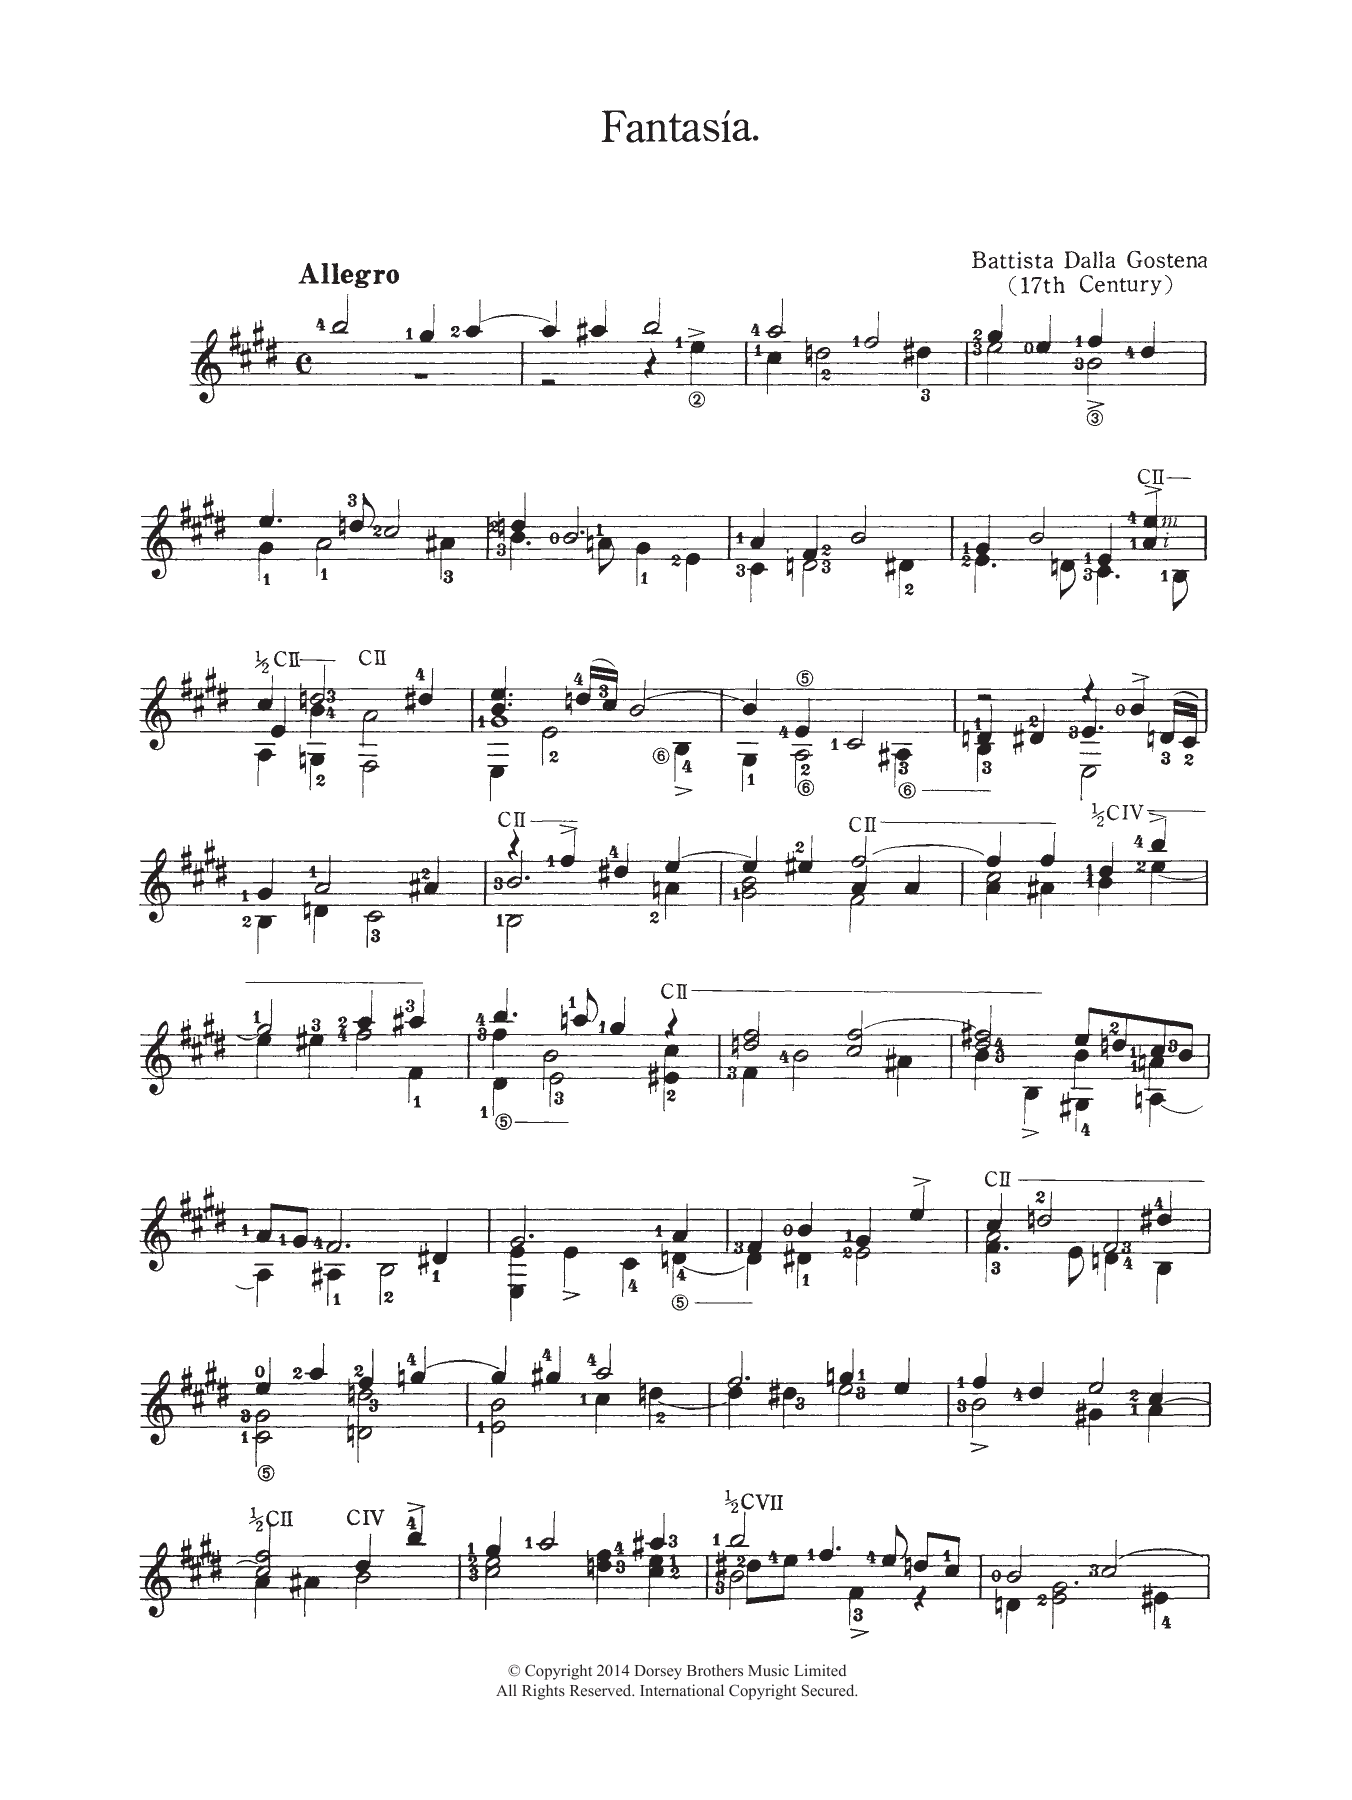 Battista Dalla Gostena Fantasia sheet music notes and chords arranged for Easy Guitar